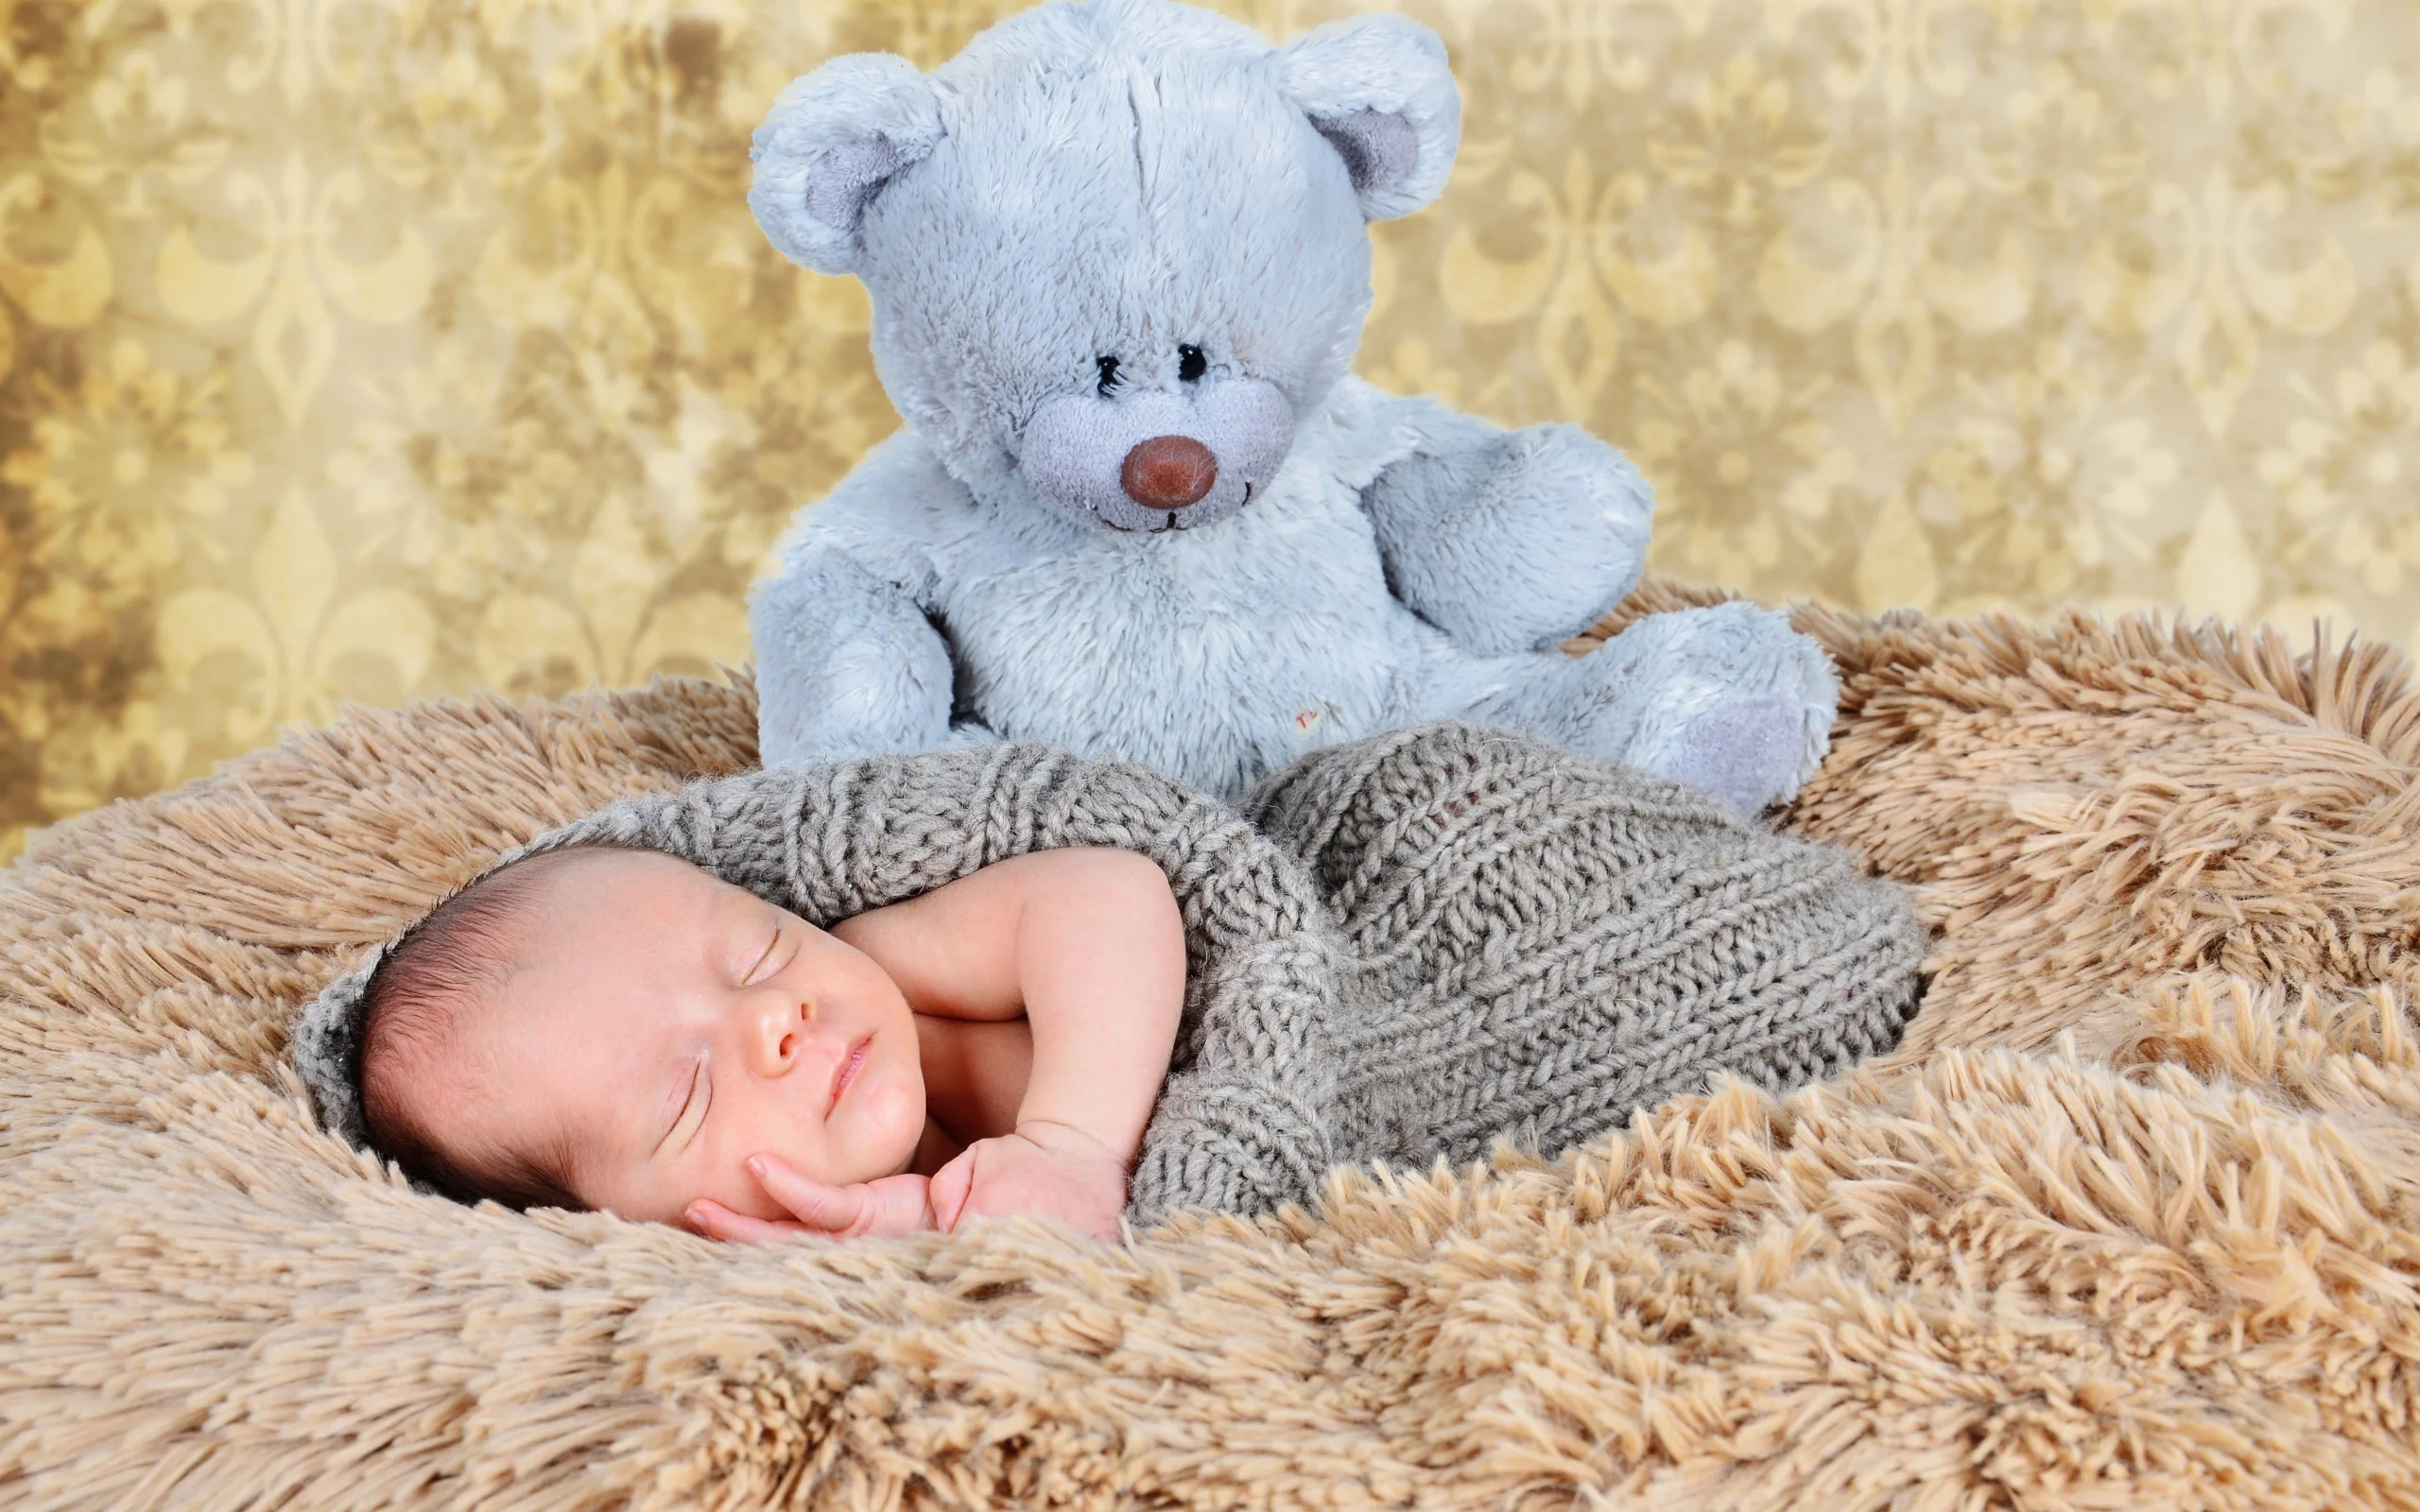 Baby boy sleeping in blanket beside his teddy bear so cute hd images for desktop background